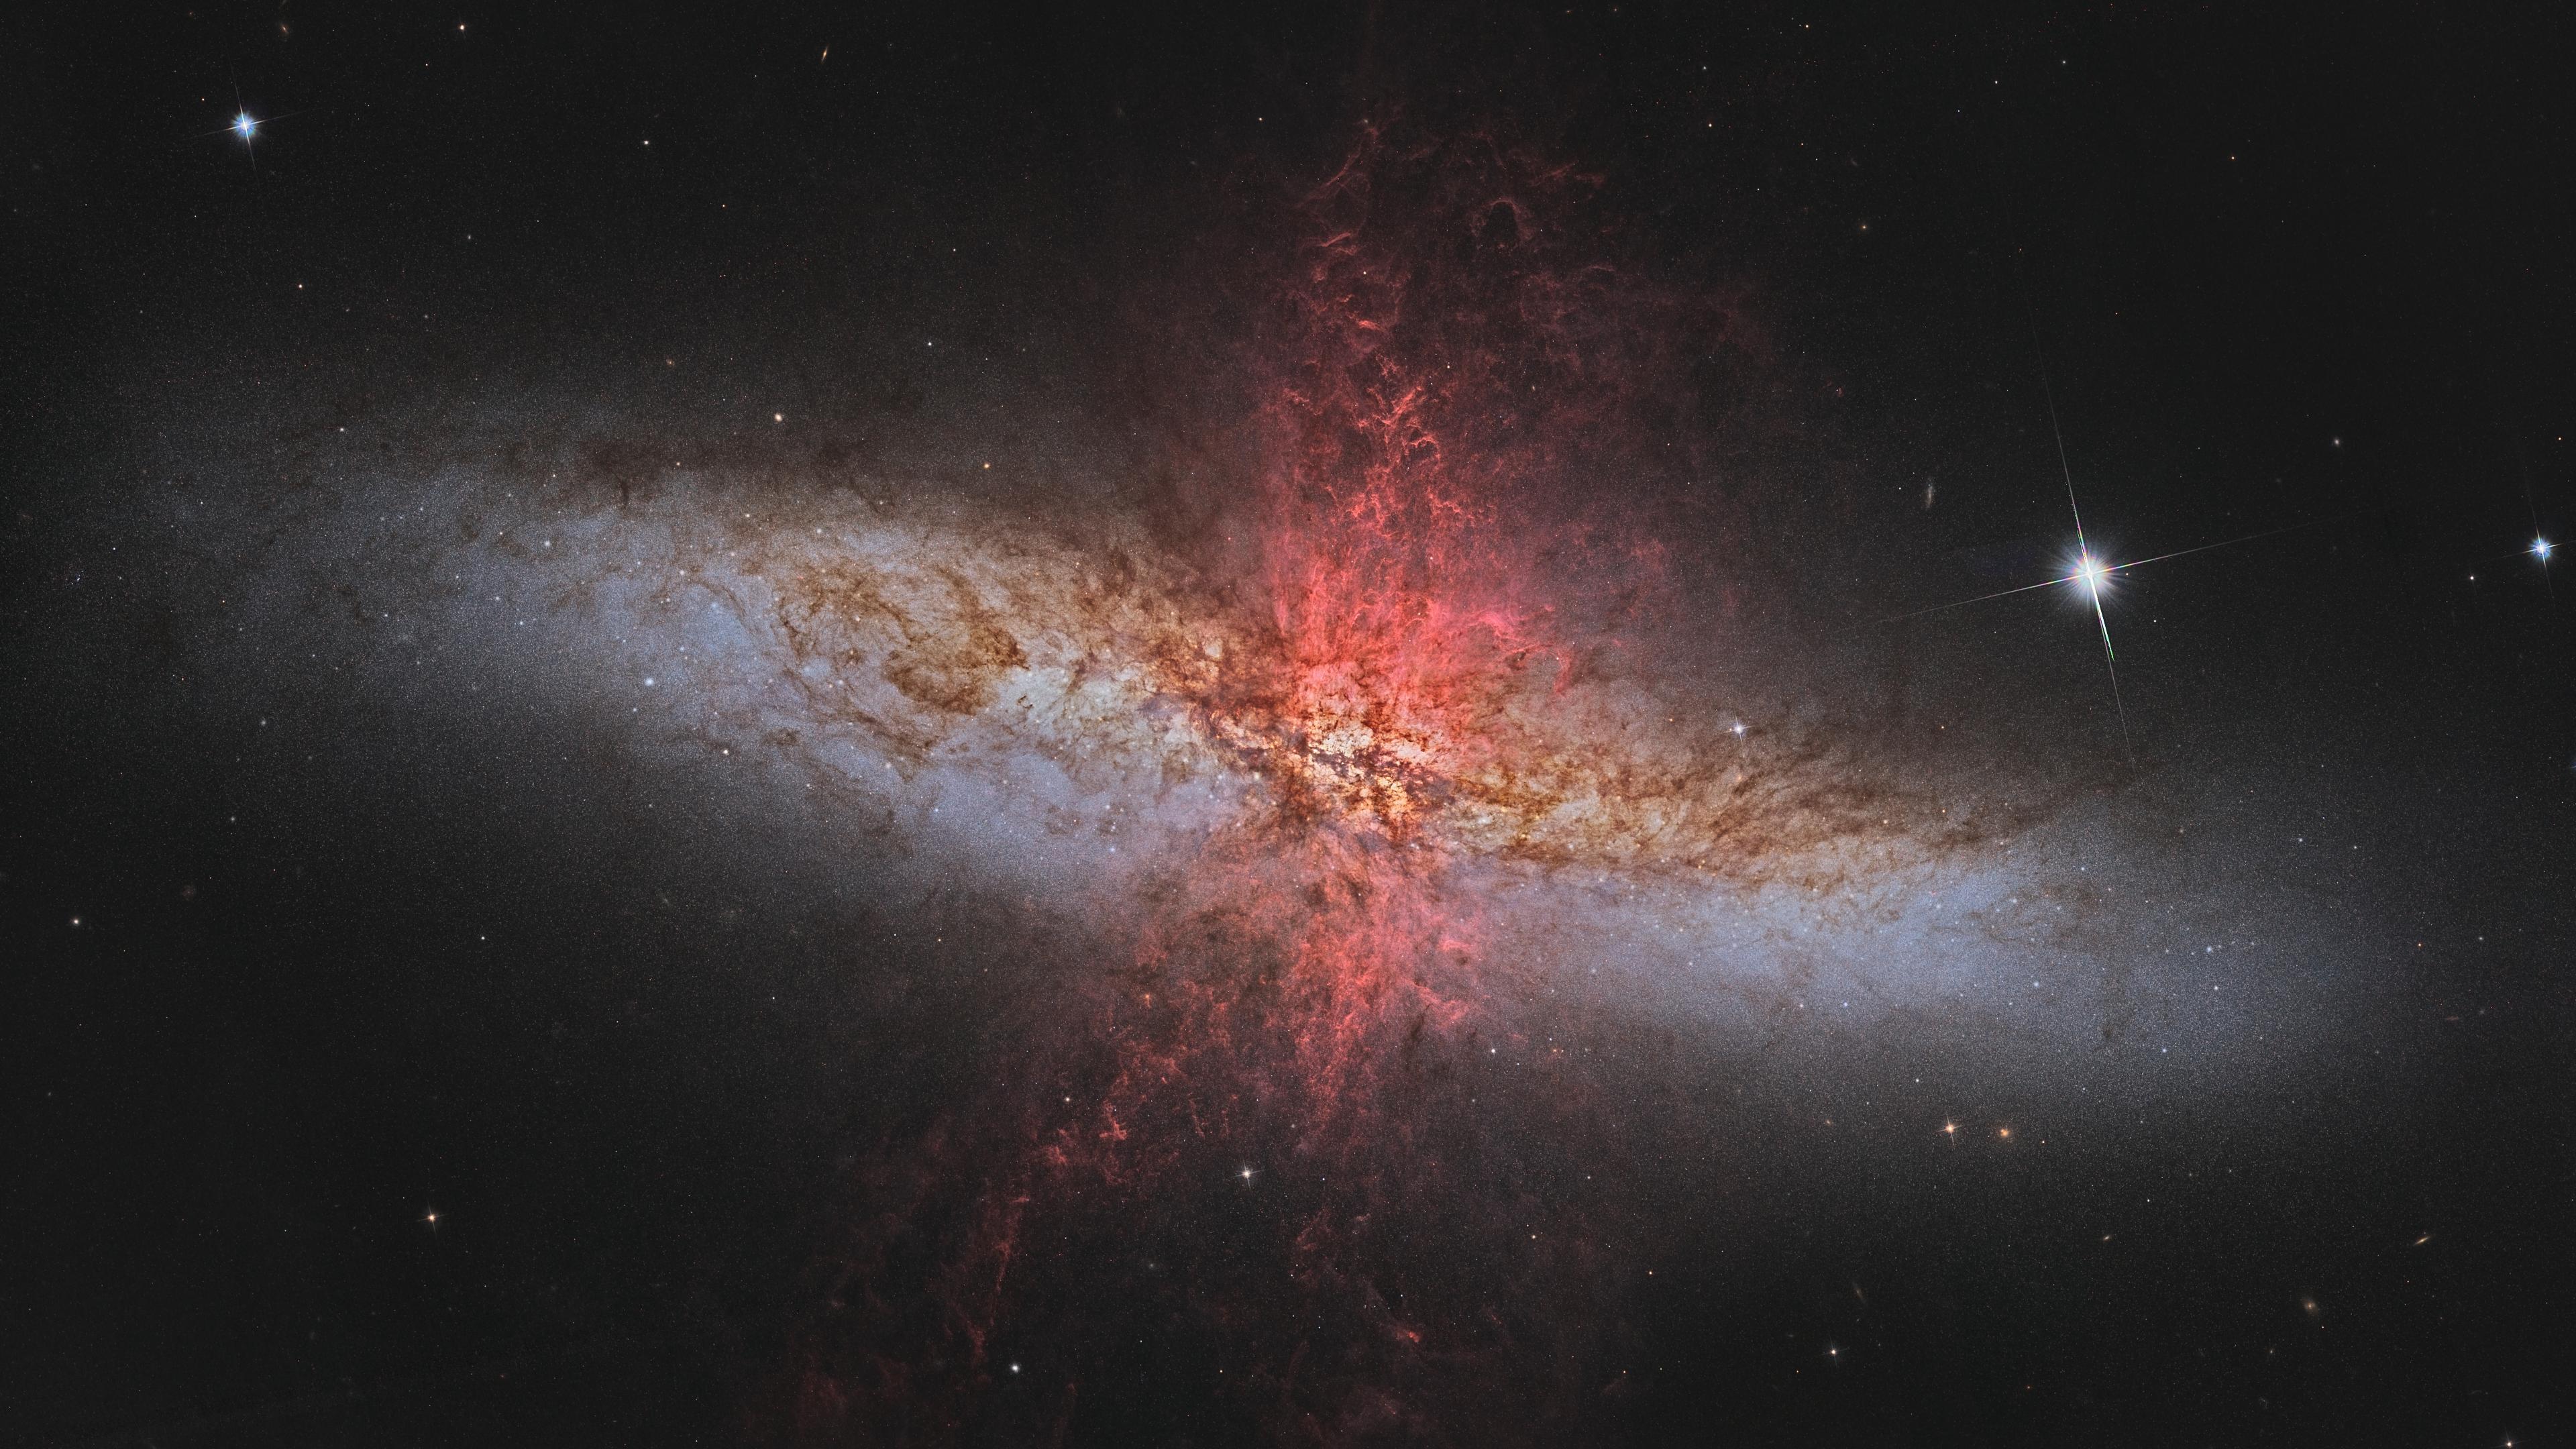 Messier 82 resolution Hubble Space Telescope image. 4k